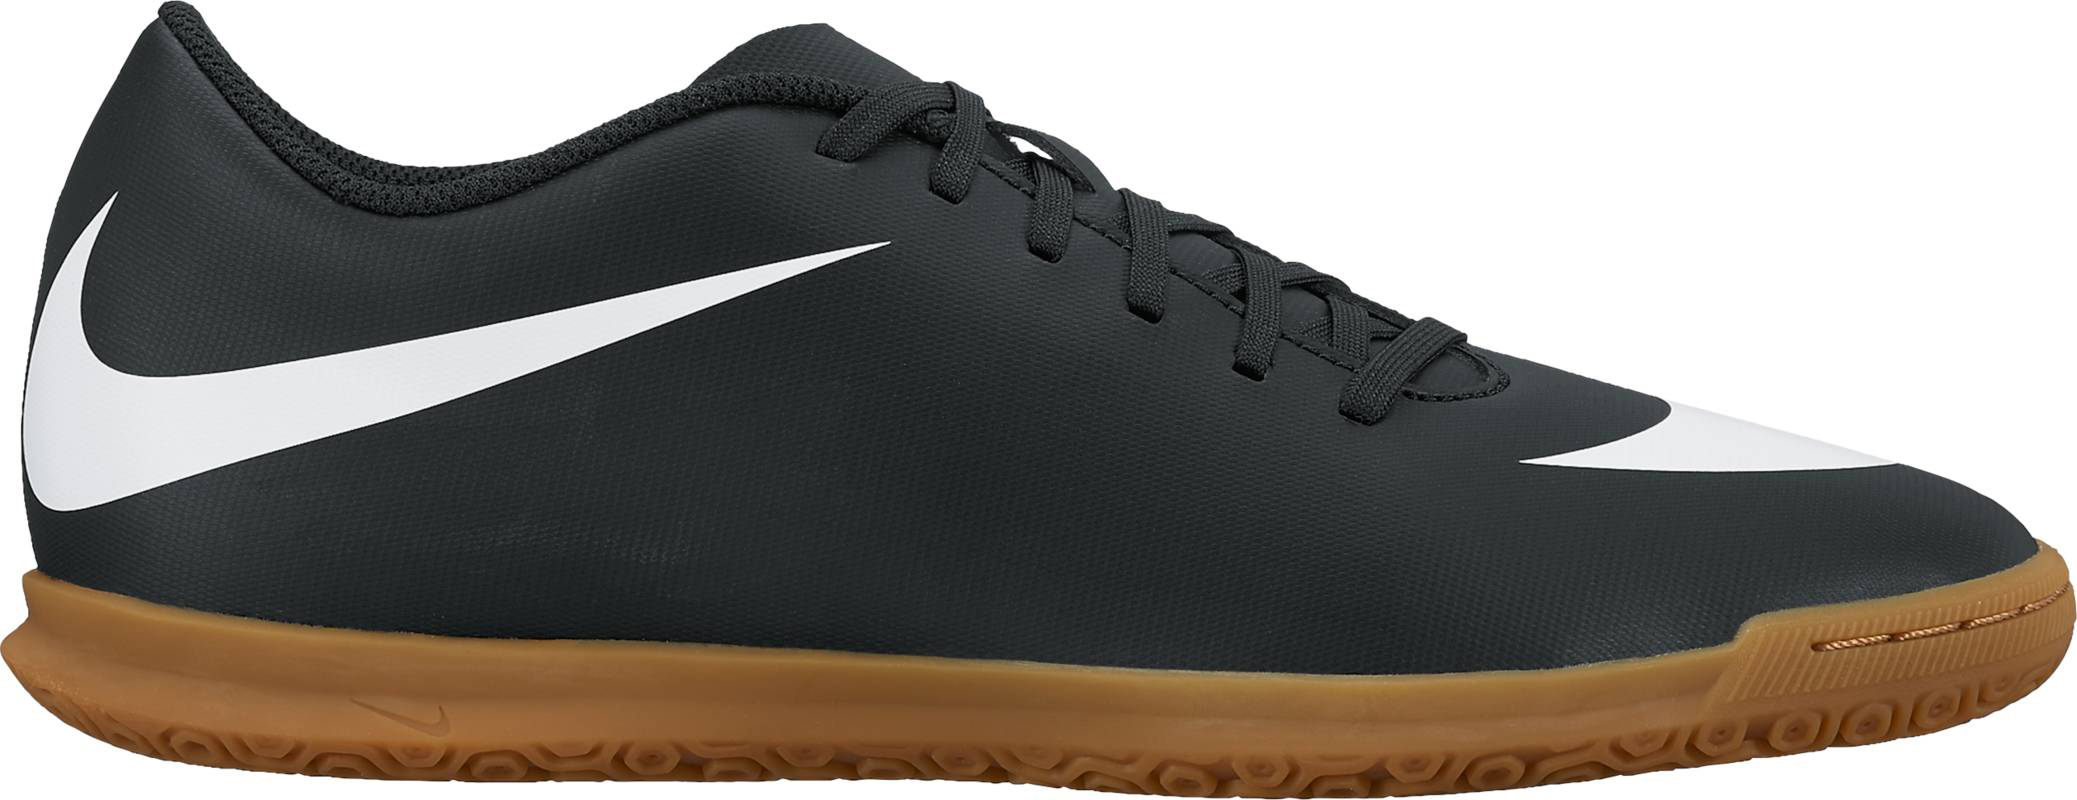 Бутсы мужские Nike Bravatax Ii Ic, цвет: черный. 844441-001. Размер 6 (37,5)